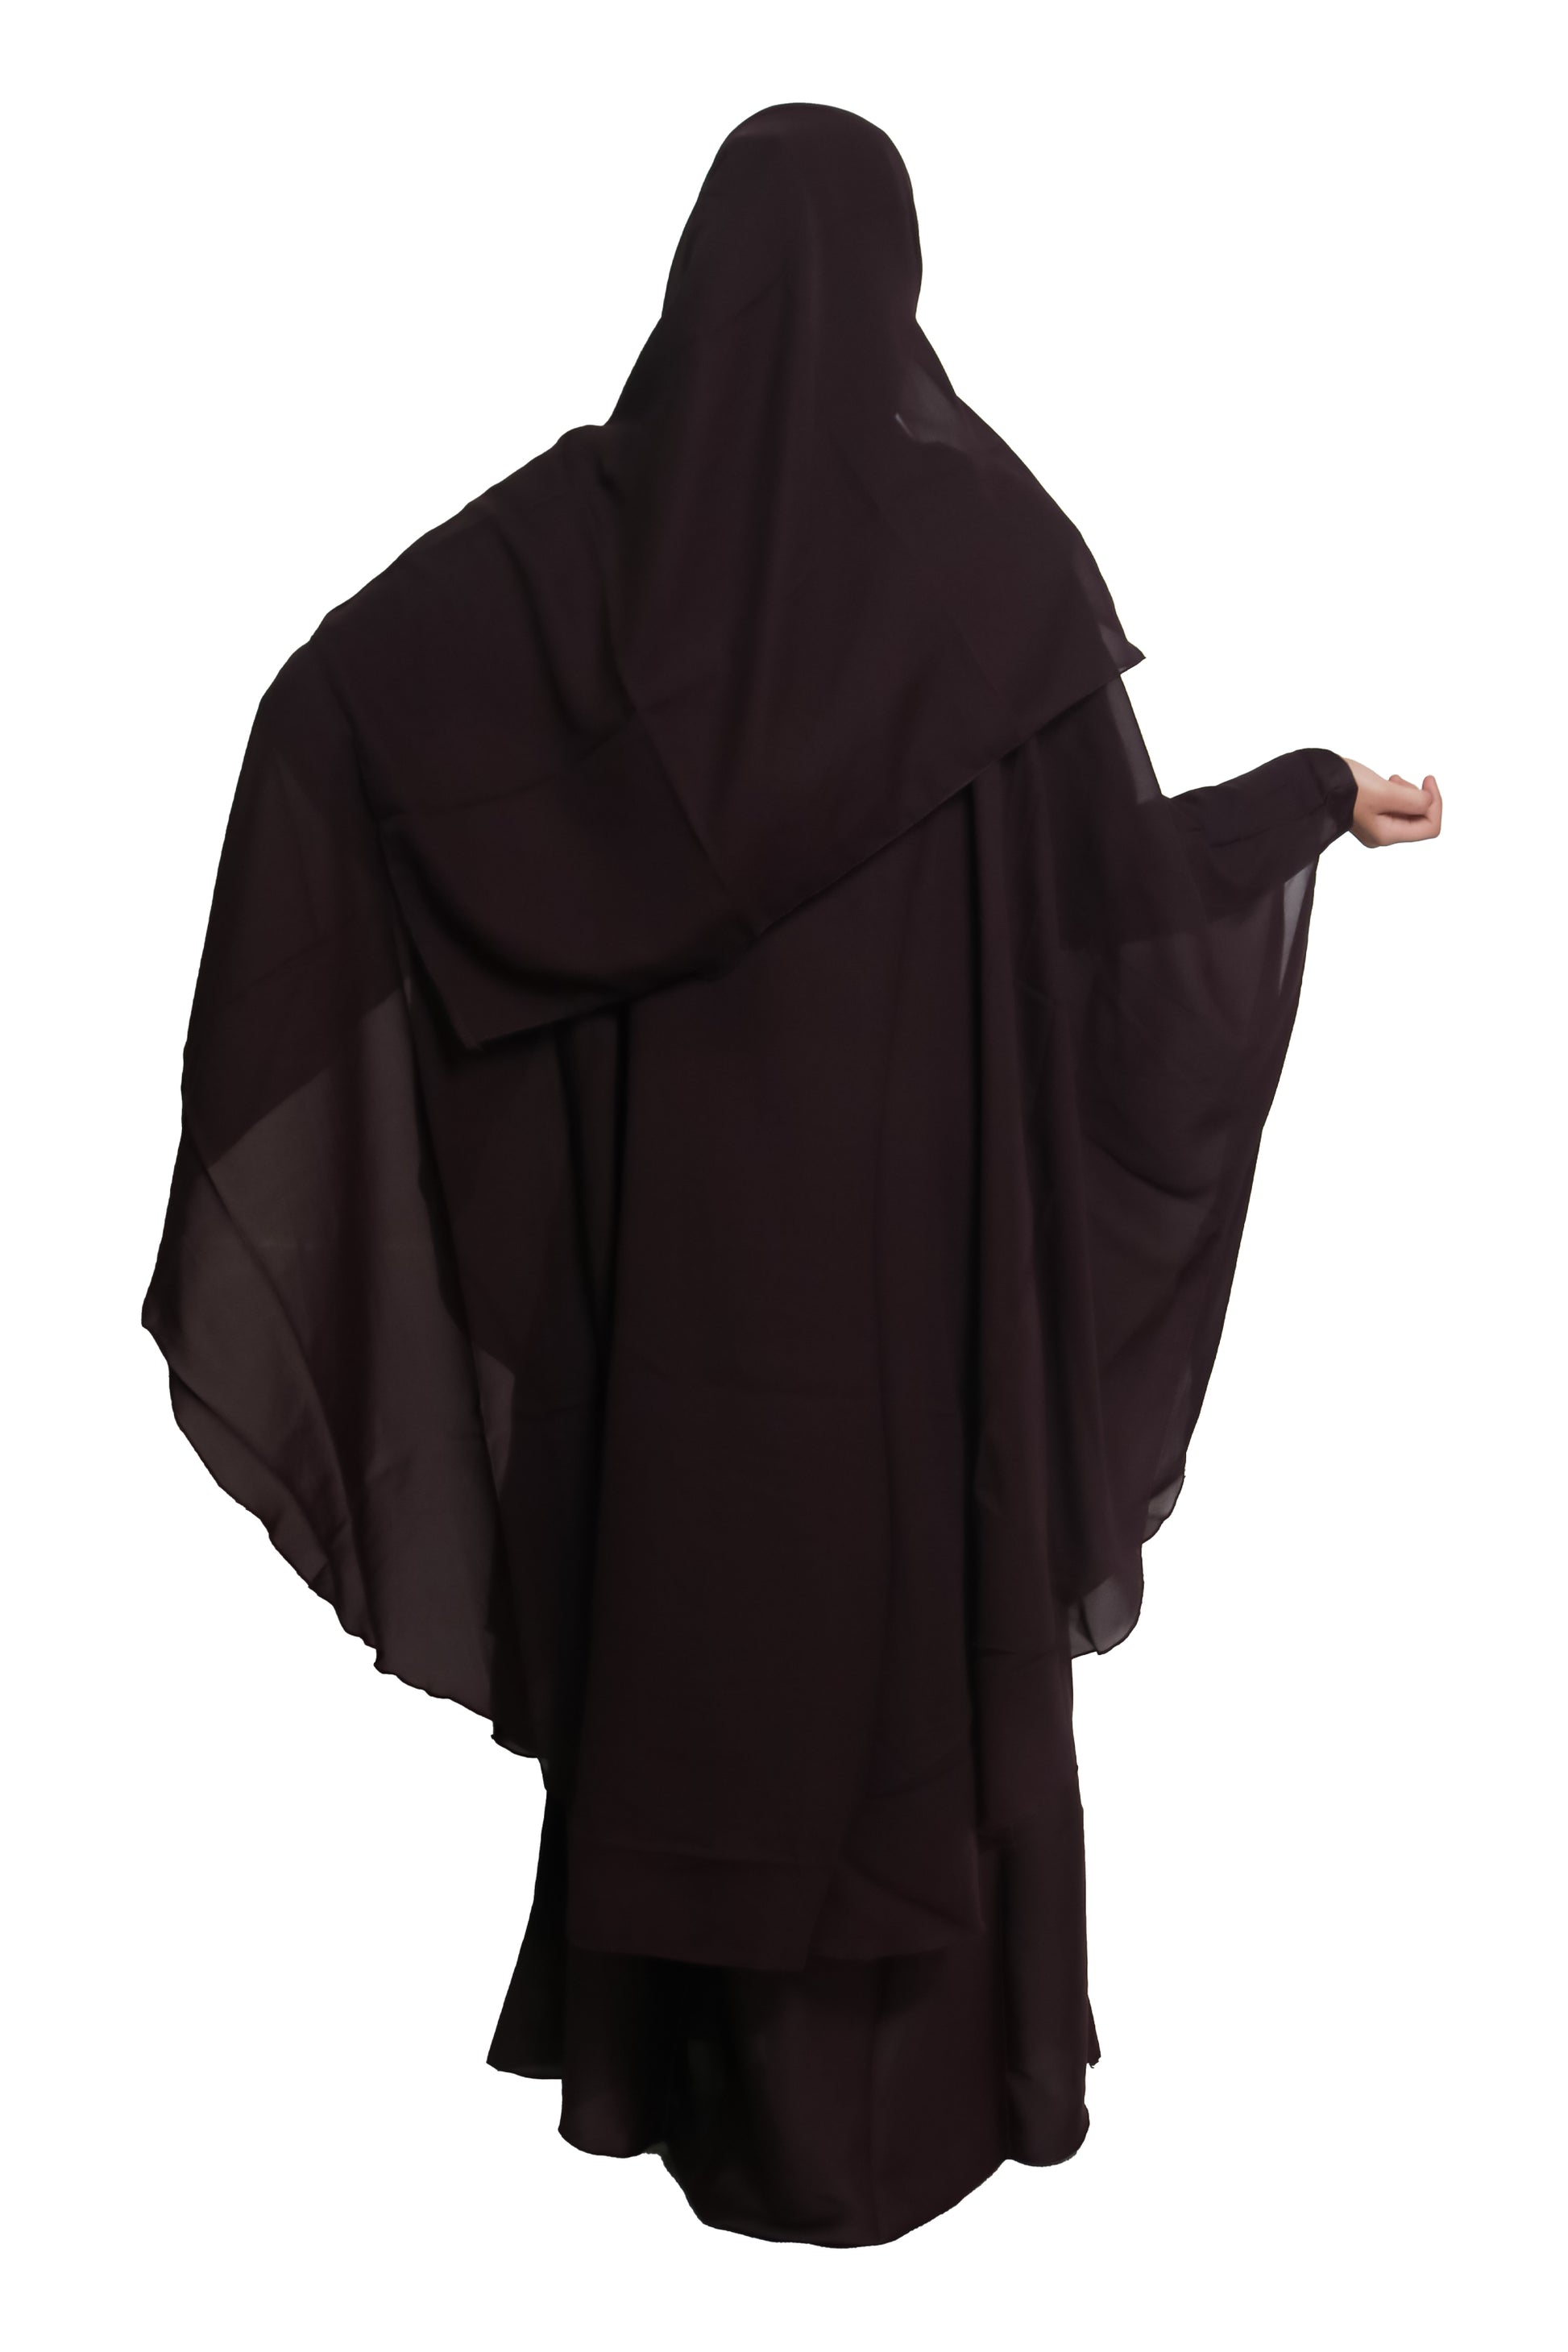 Modest City Self Design Plain Purple Farasha Nida Abaya or Burqa With Georgette Layer for Women & Girls-Series Laiba